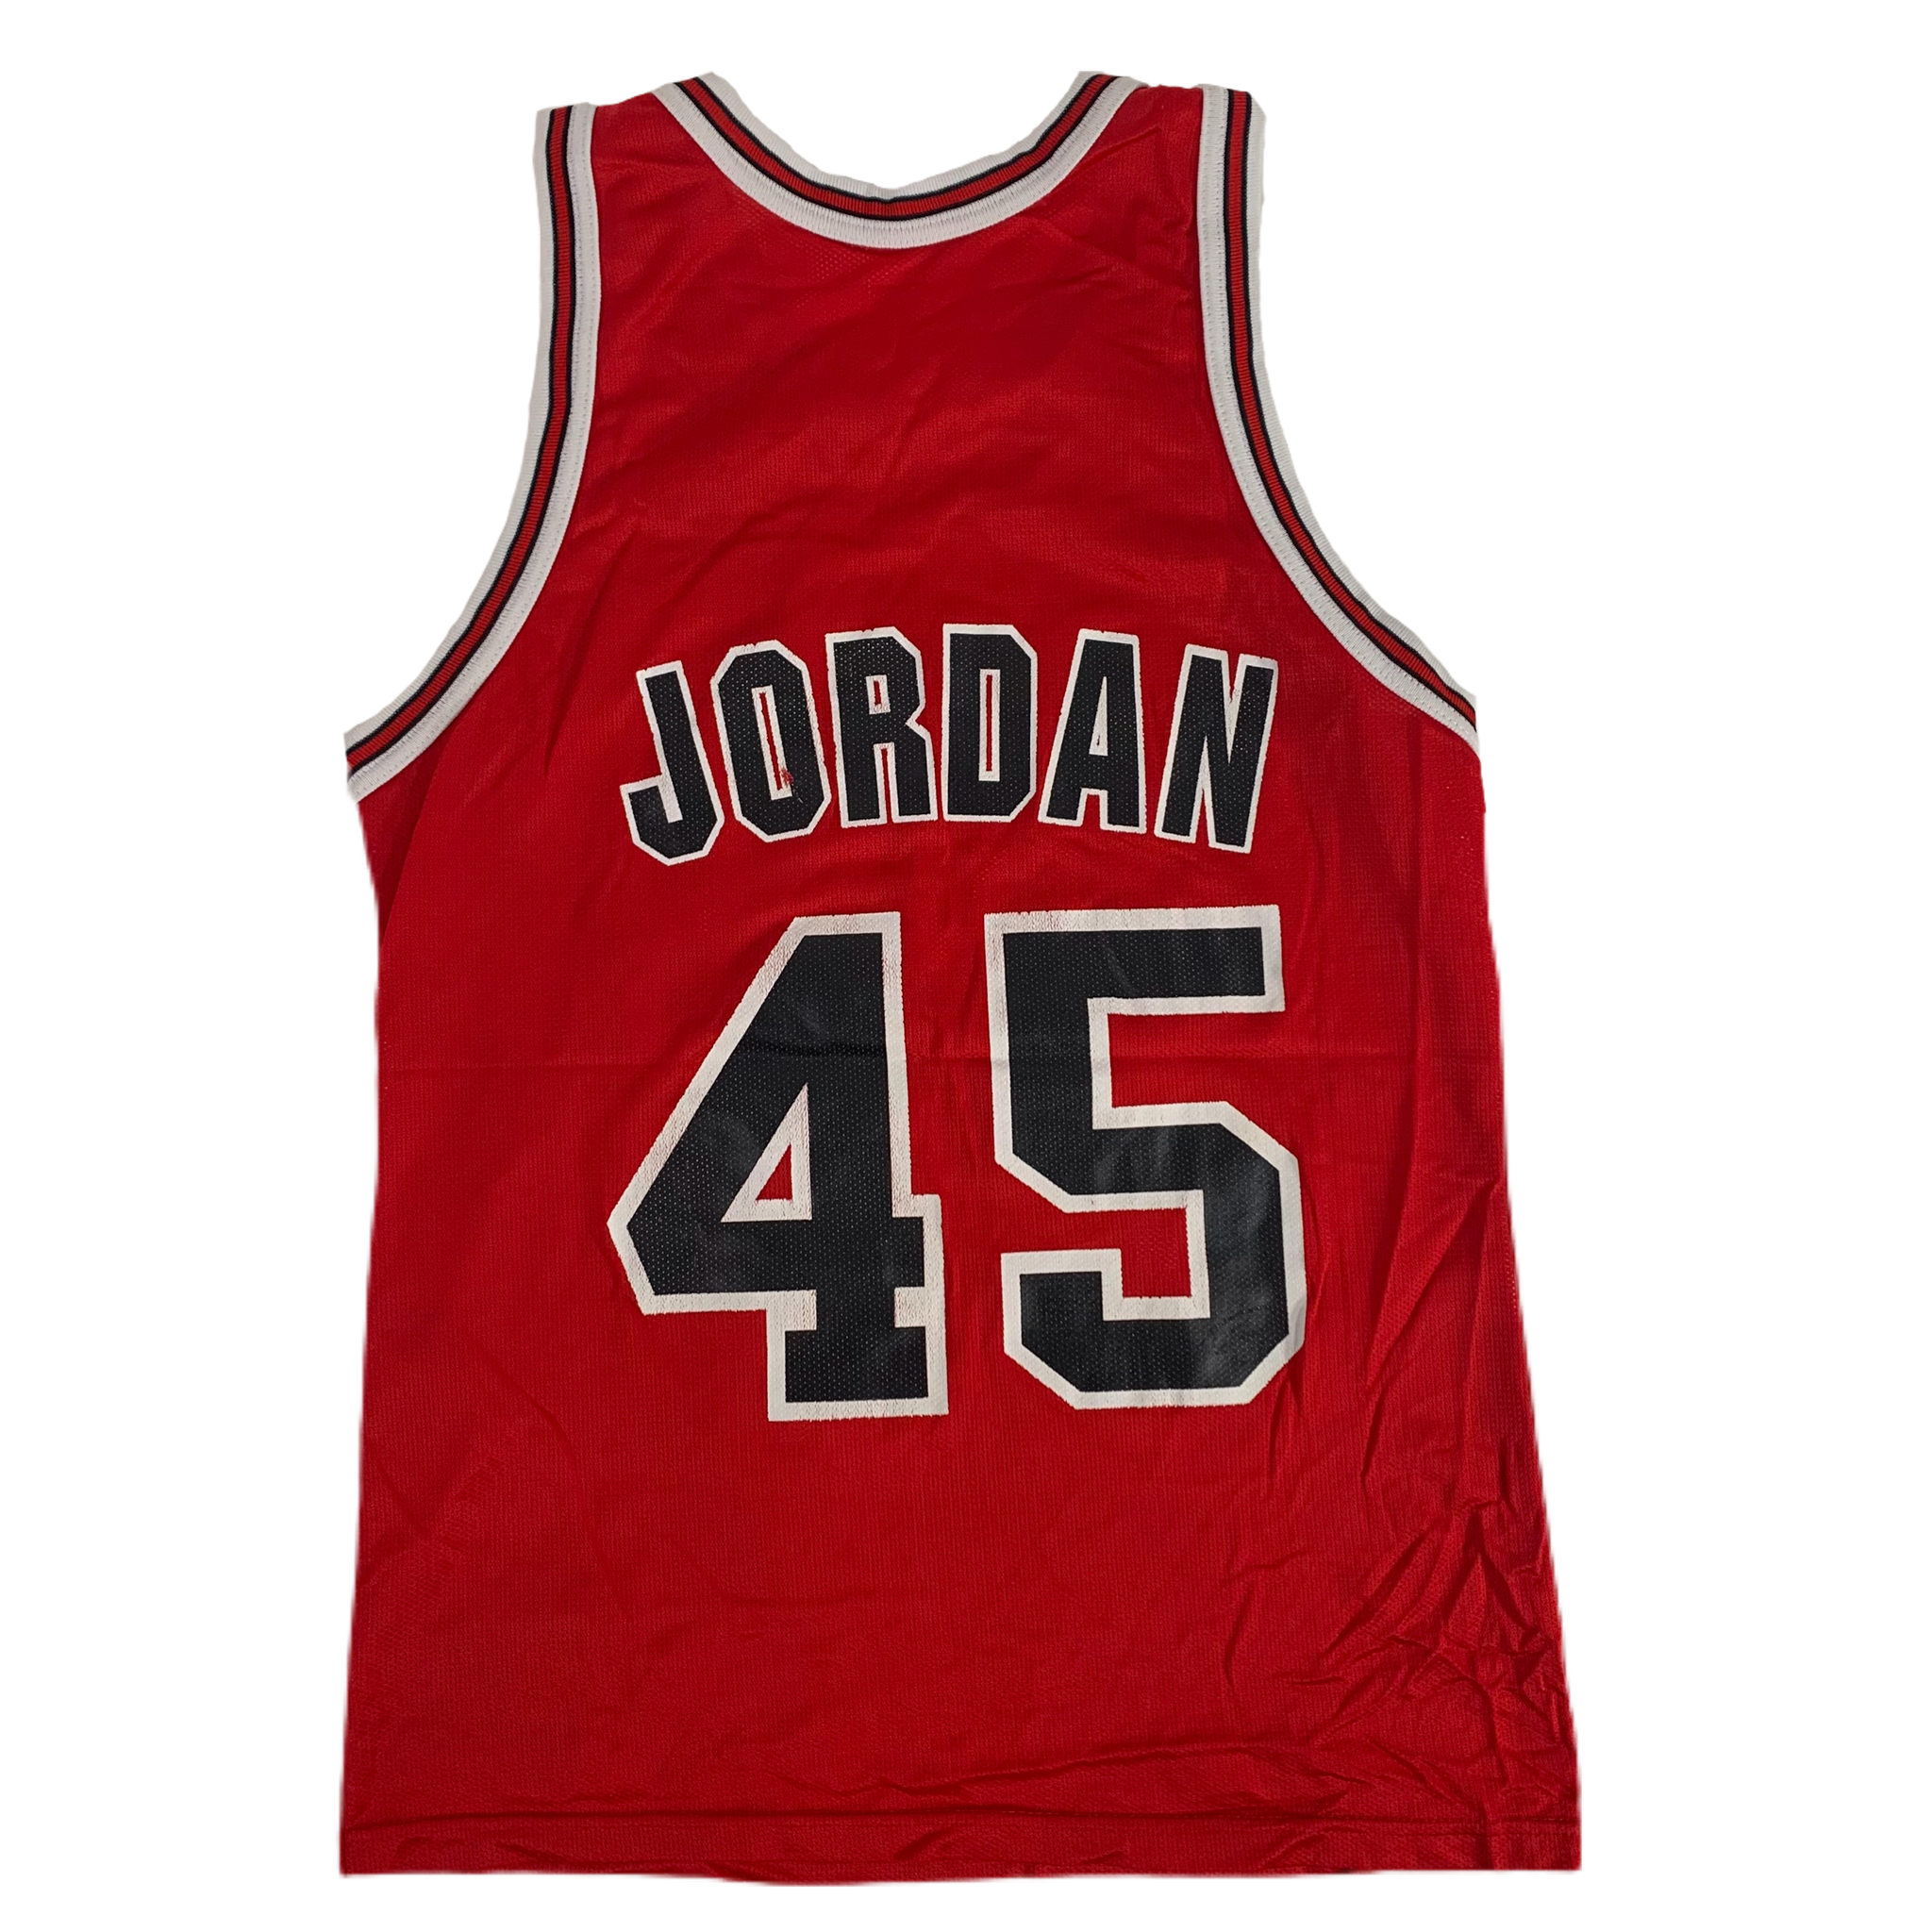 Should The Chicago Bulls Retire Michael Jordan's #45 Jersey